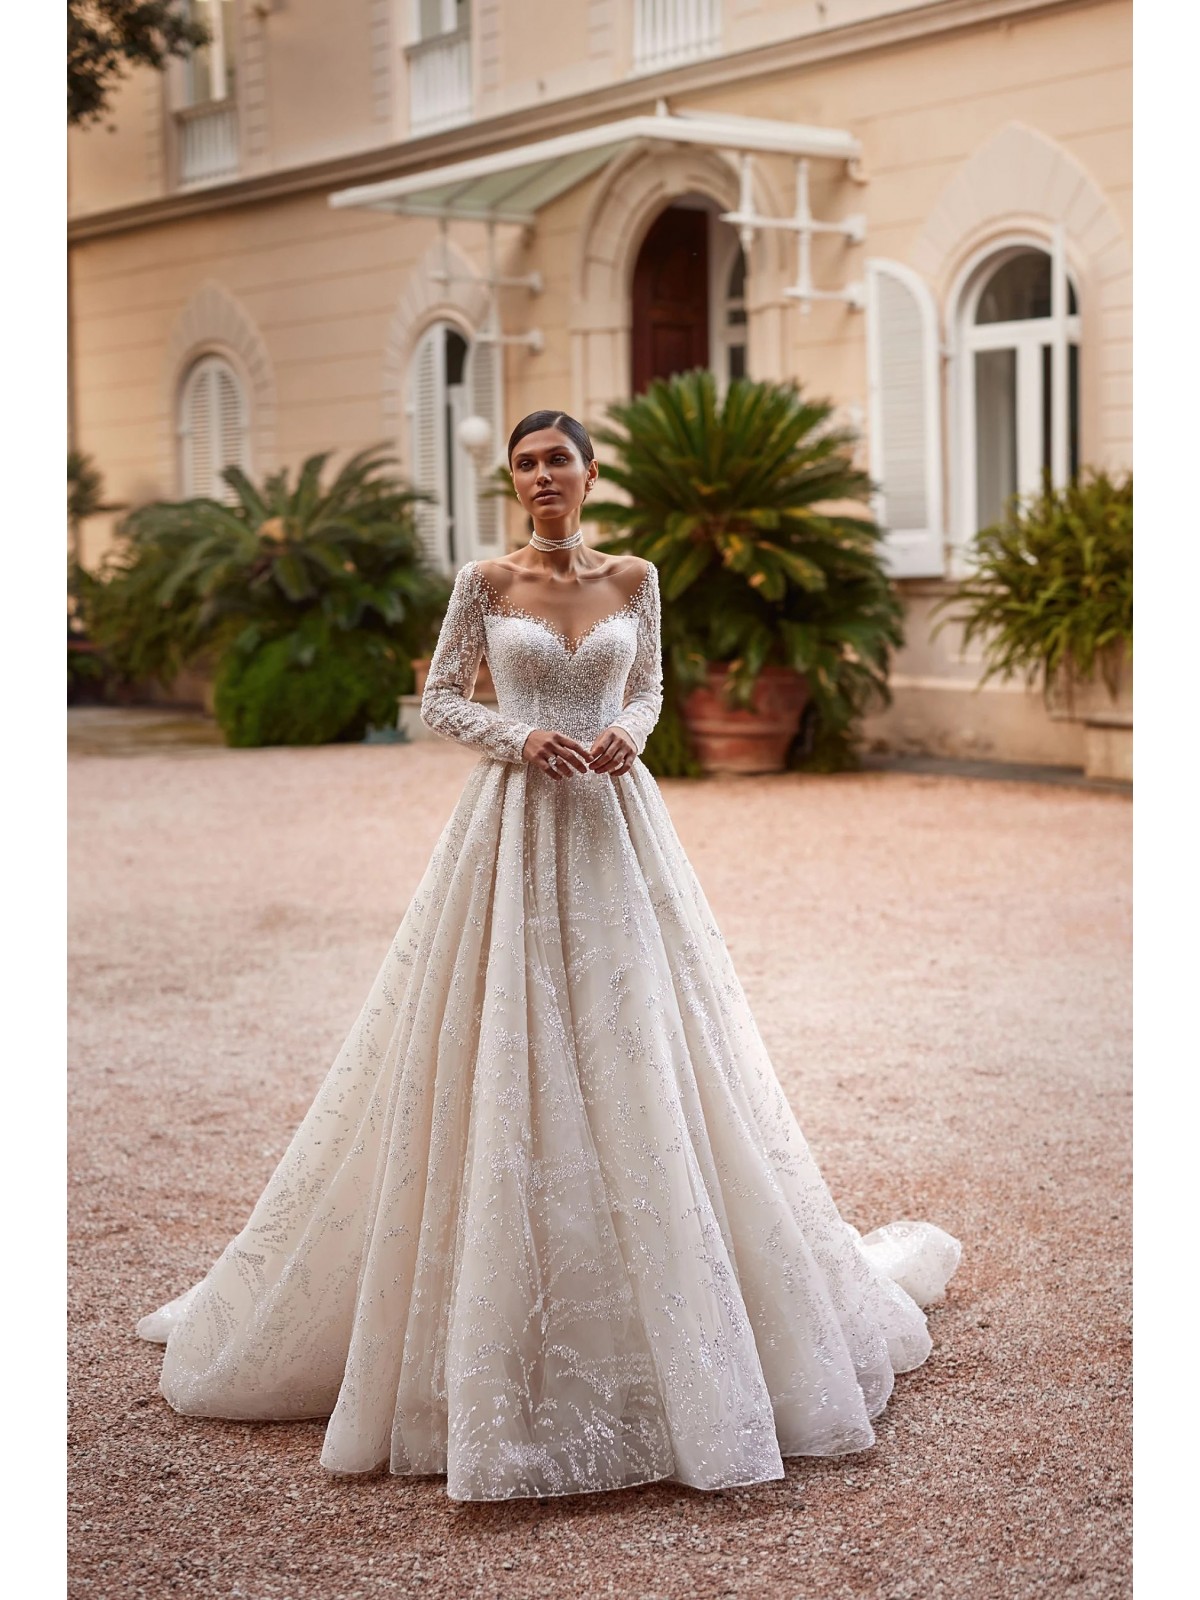 Luxury Wedding Dress - Riantra - LPLD-3310.00.17